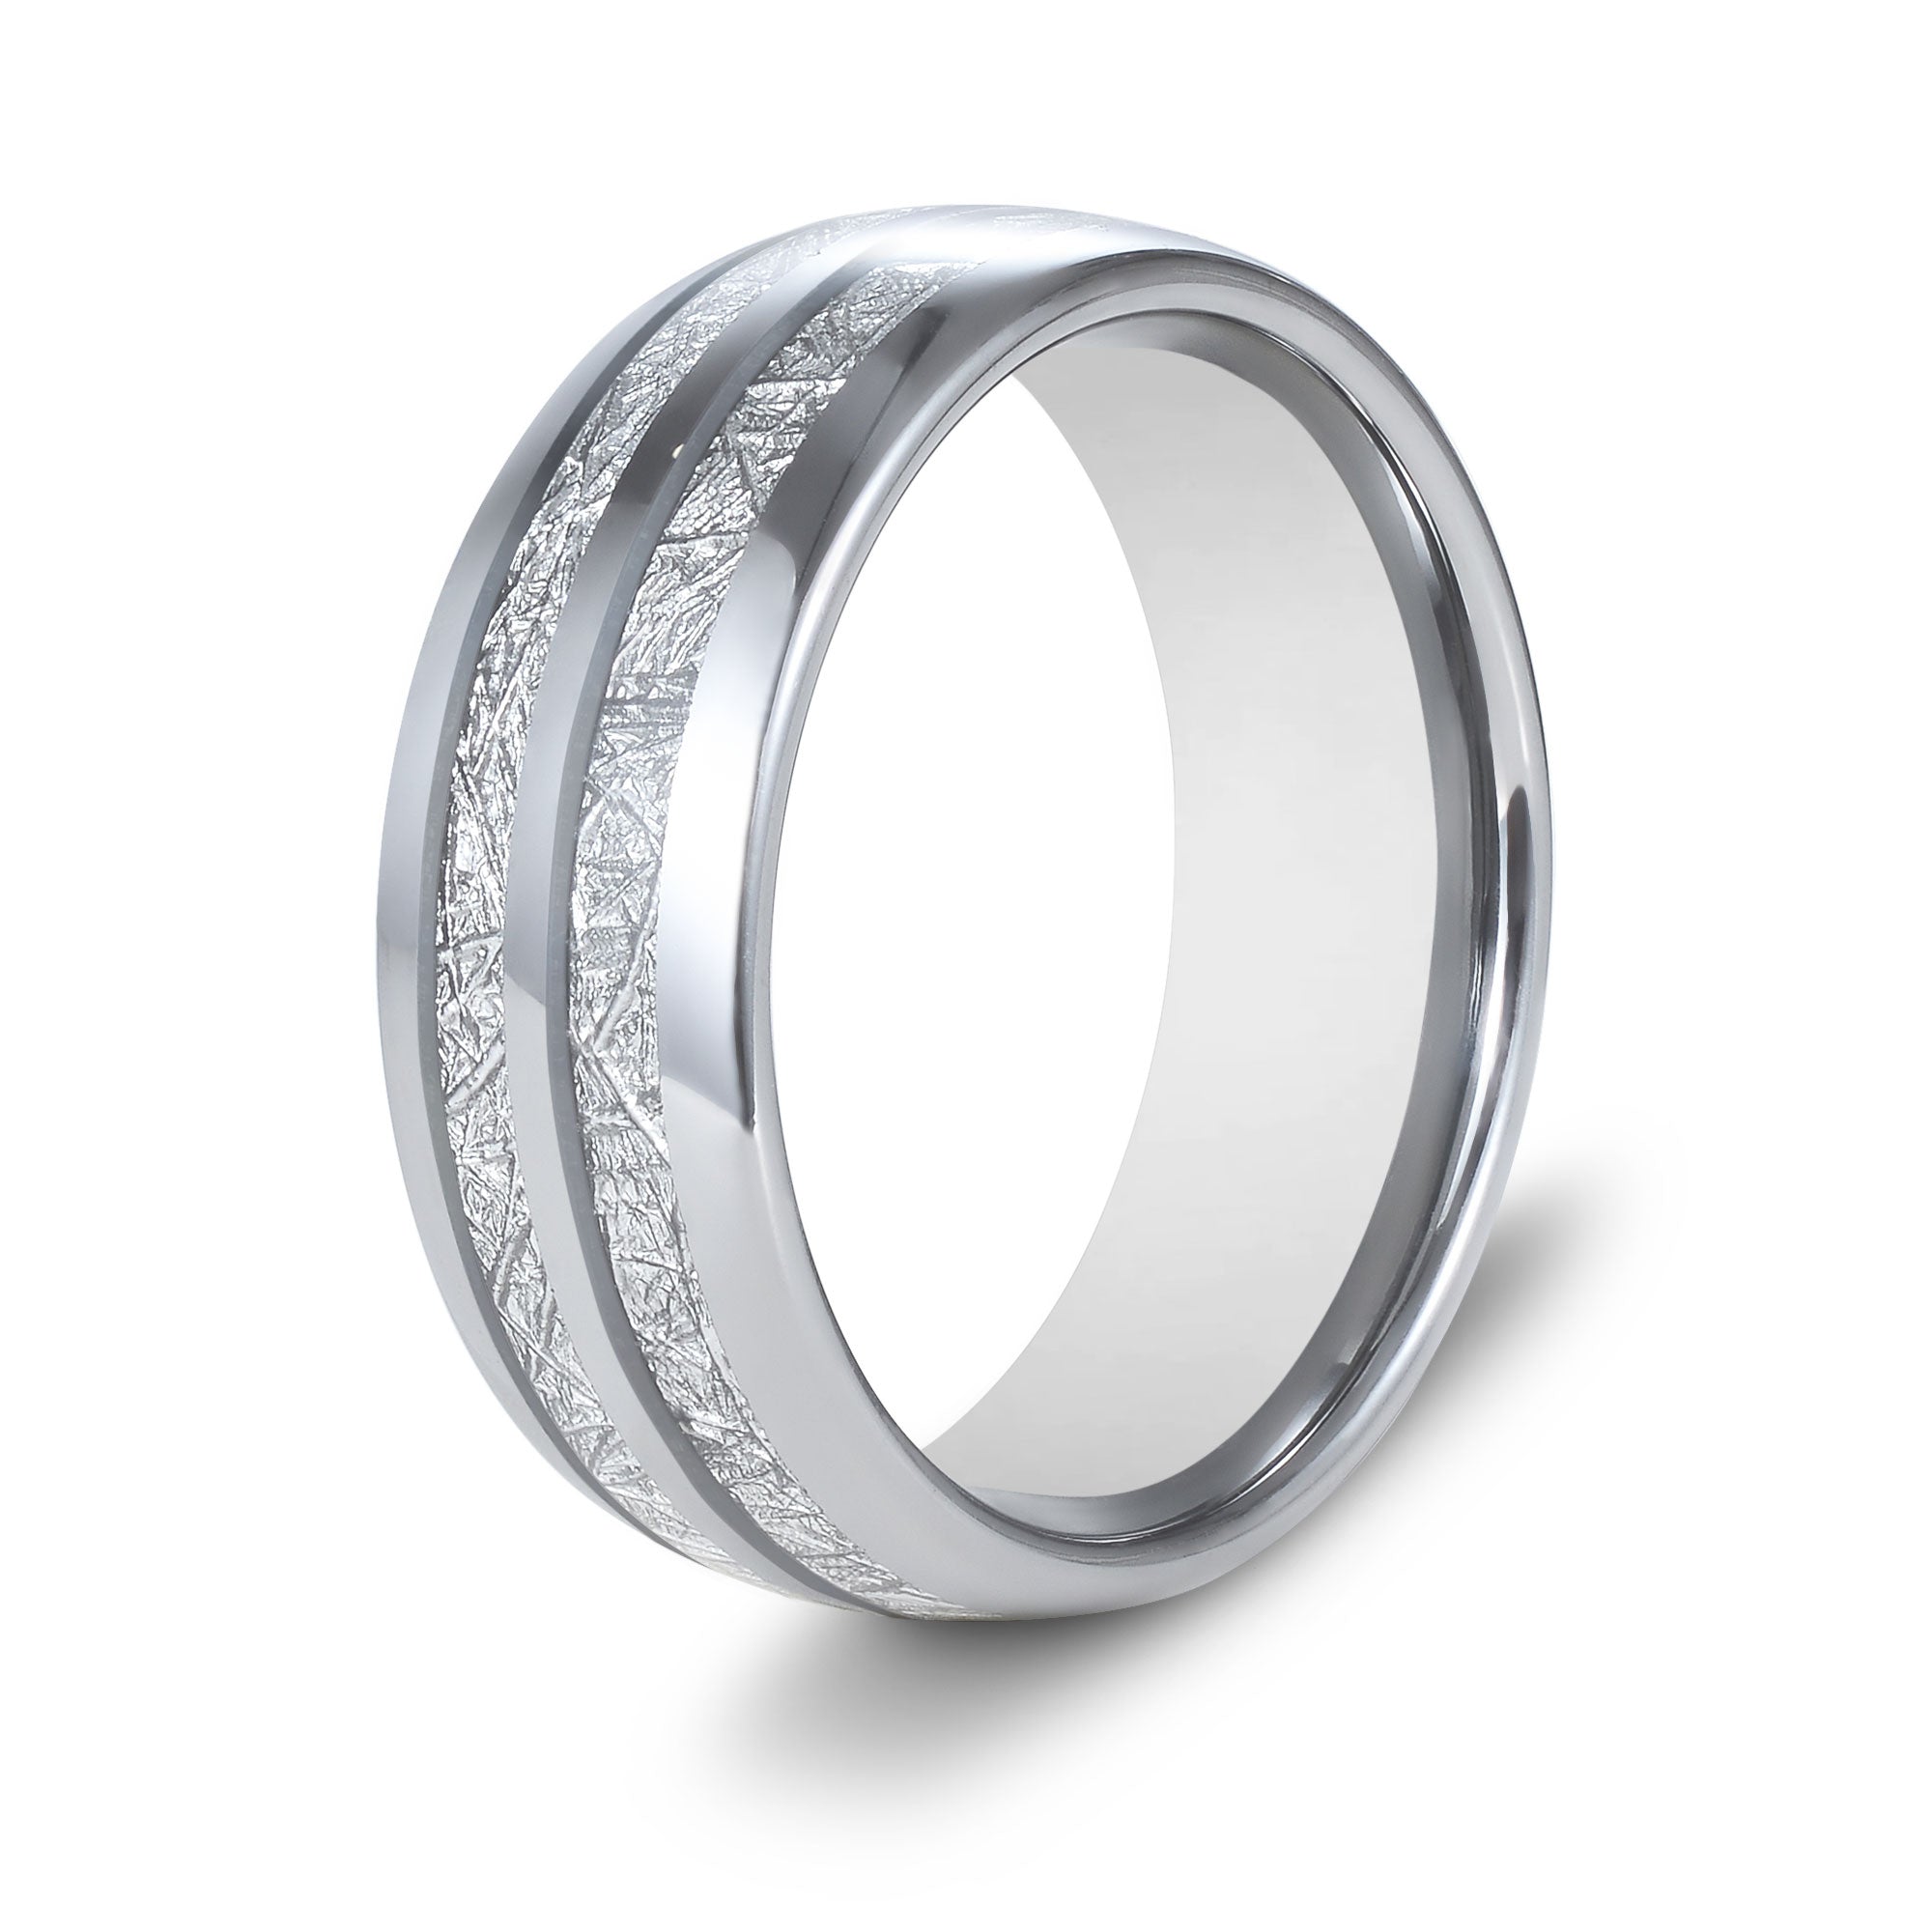 The Illuminate - Silver 8mm Meteorite Tungsten Ring